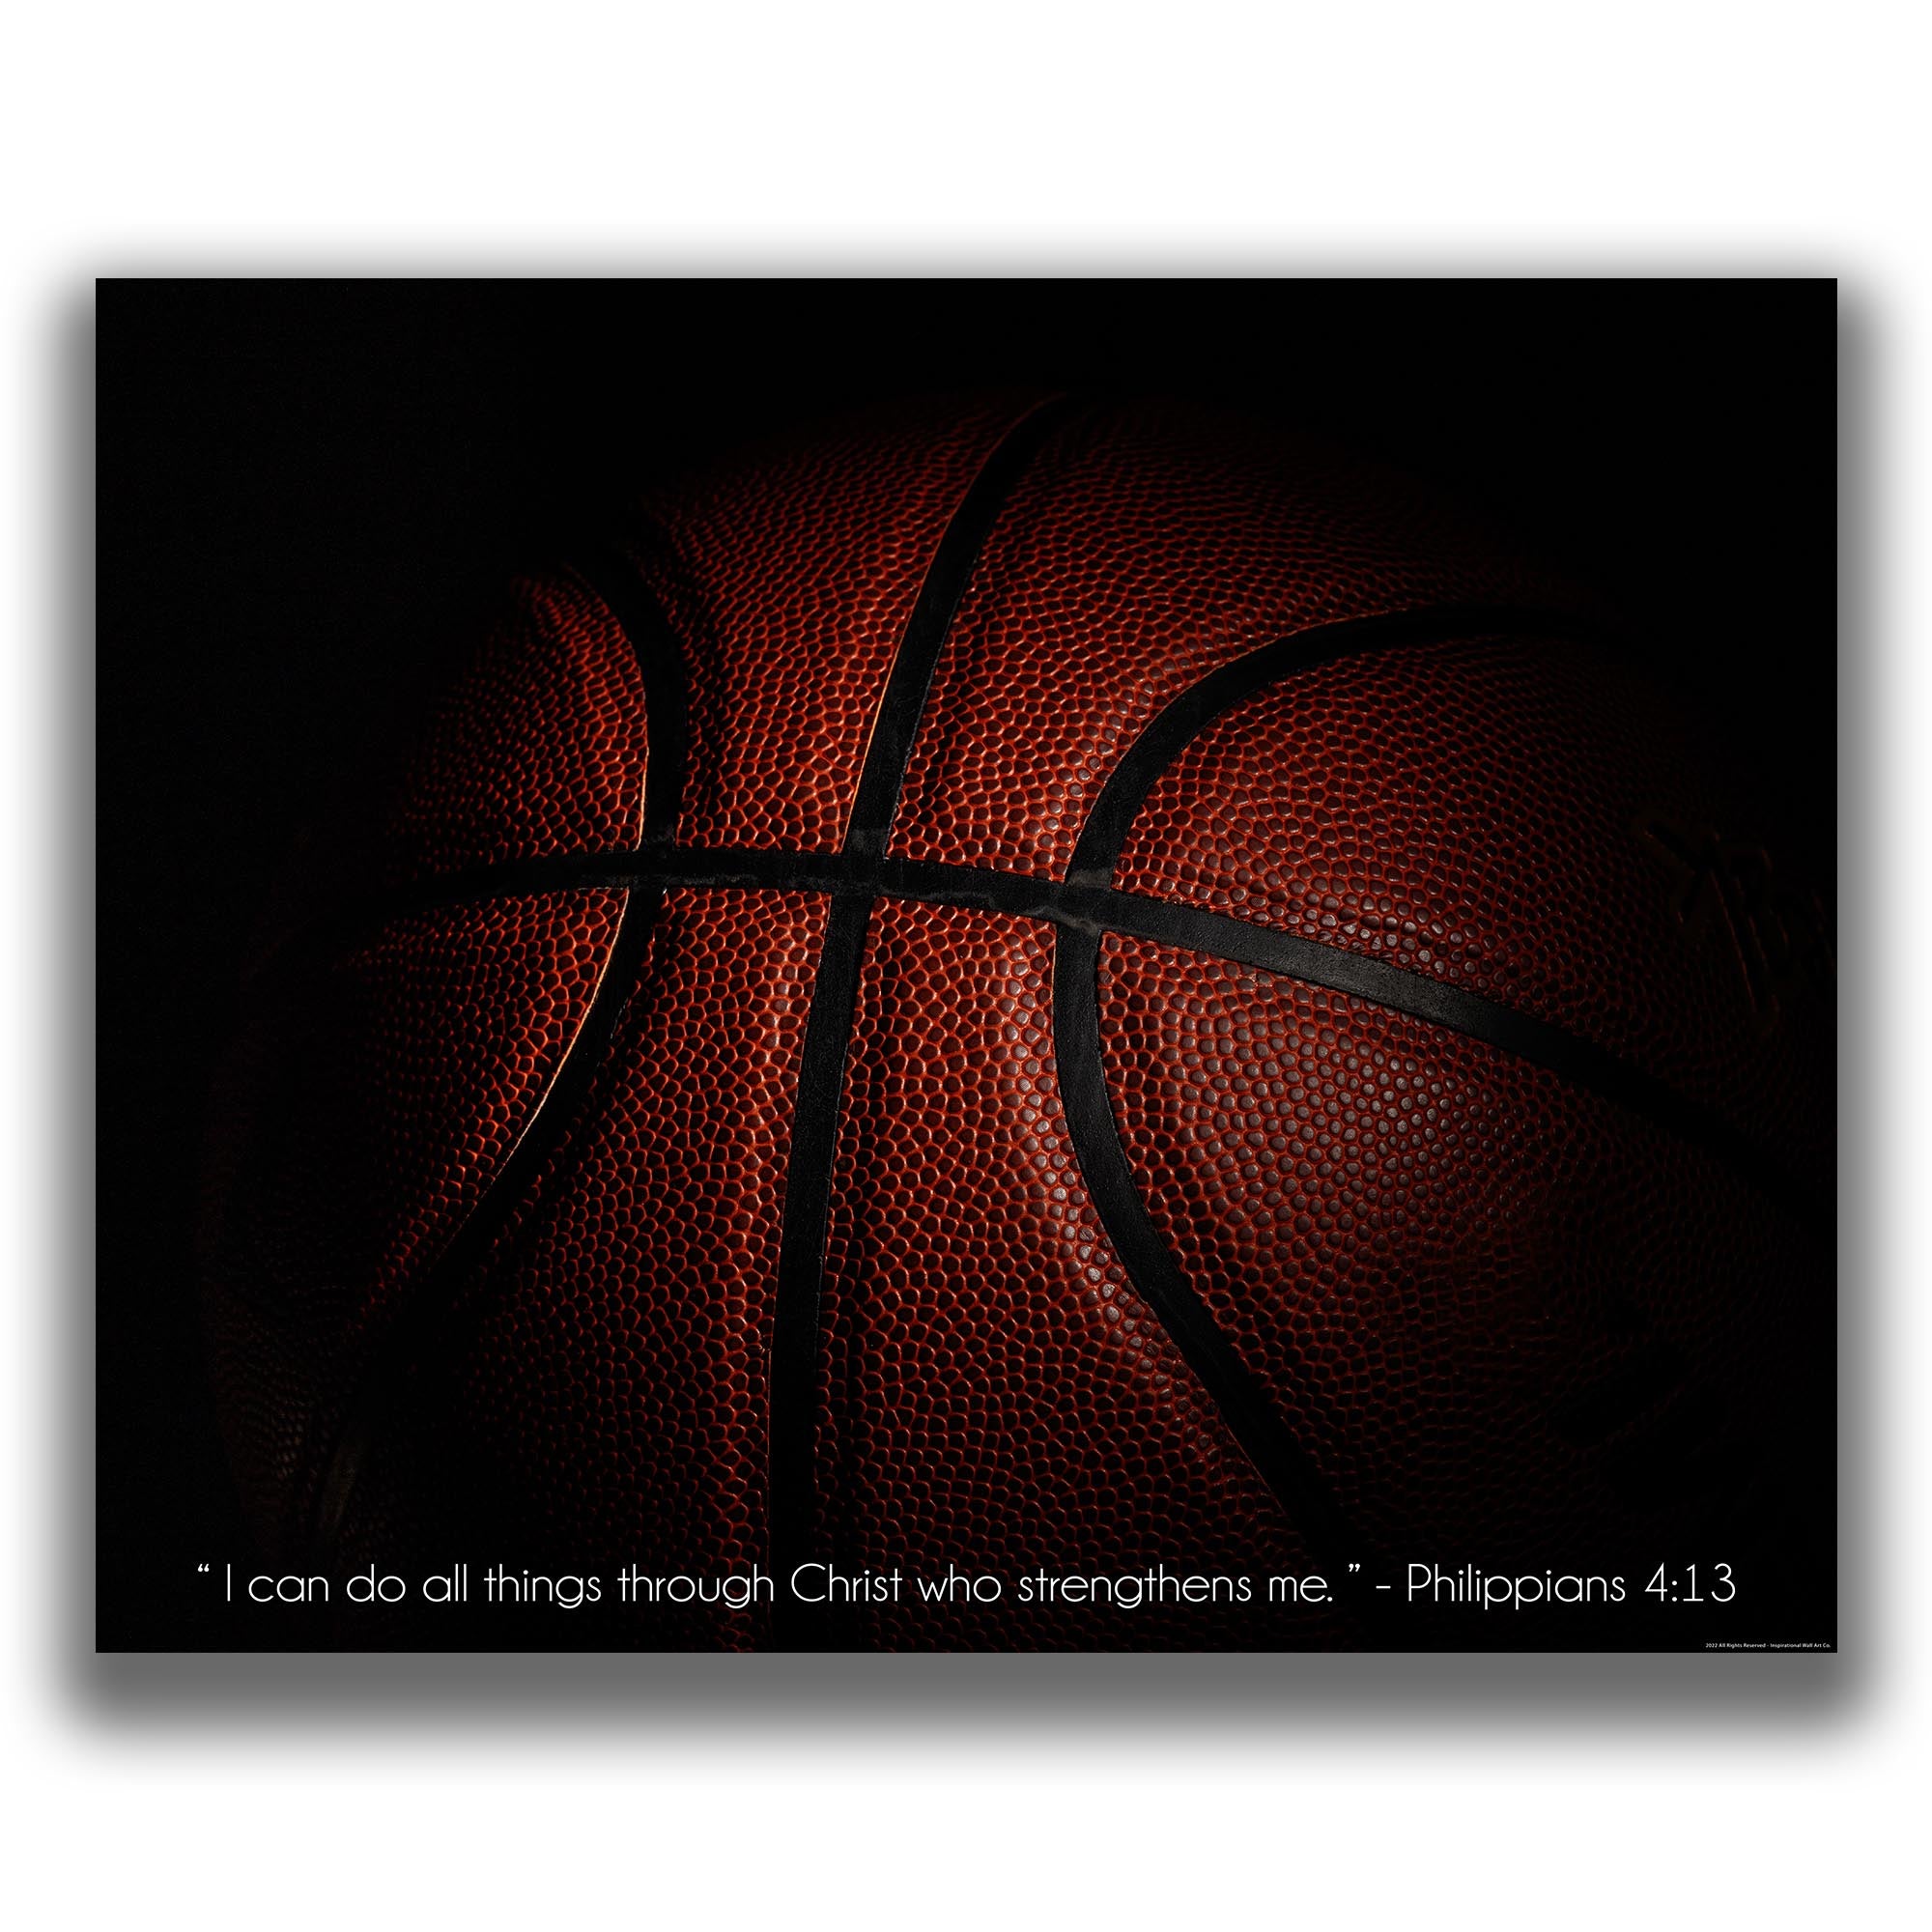 Philippians 413 - Basketball Poster